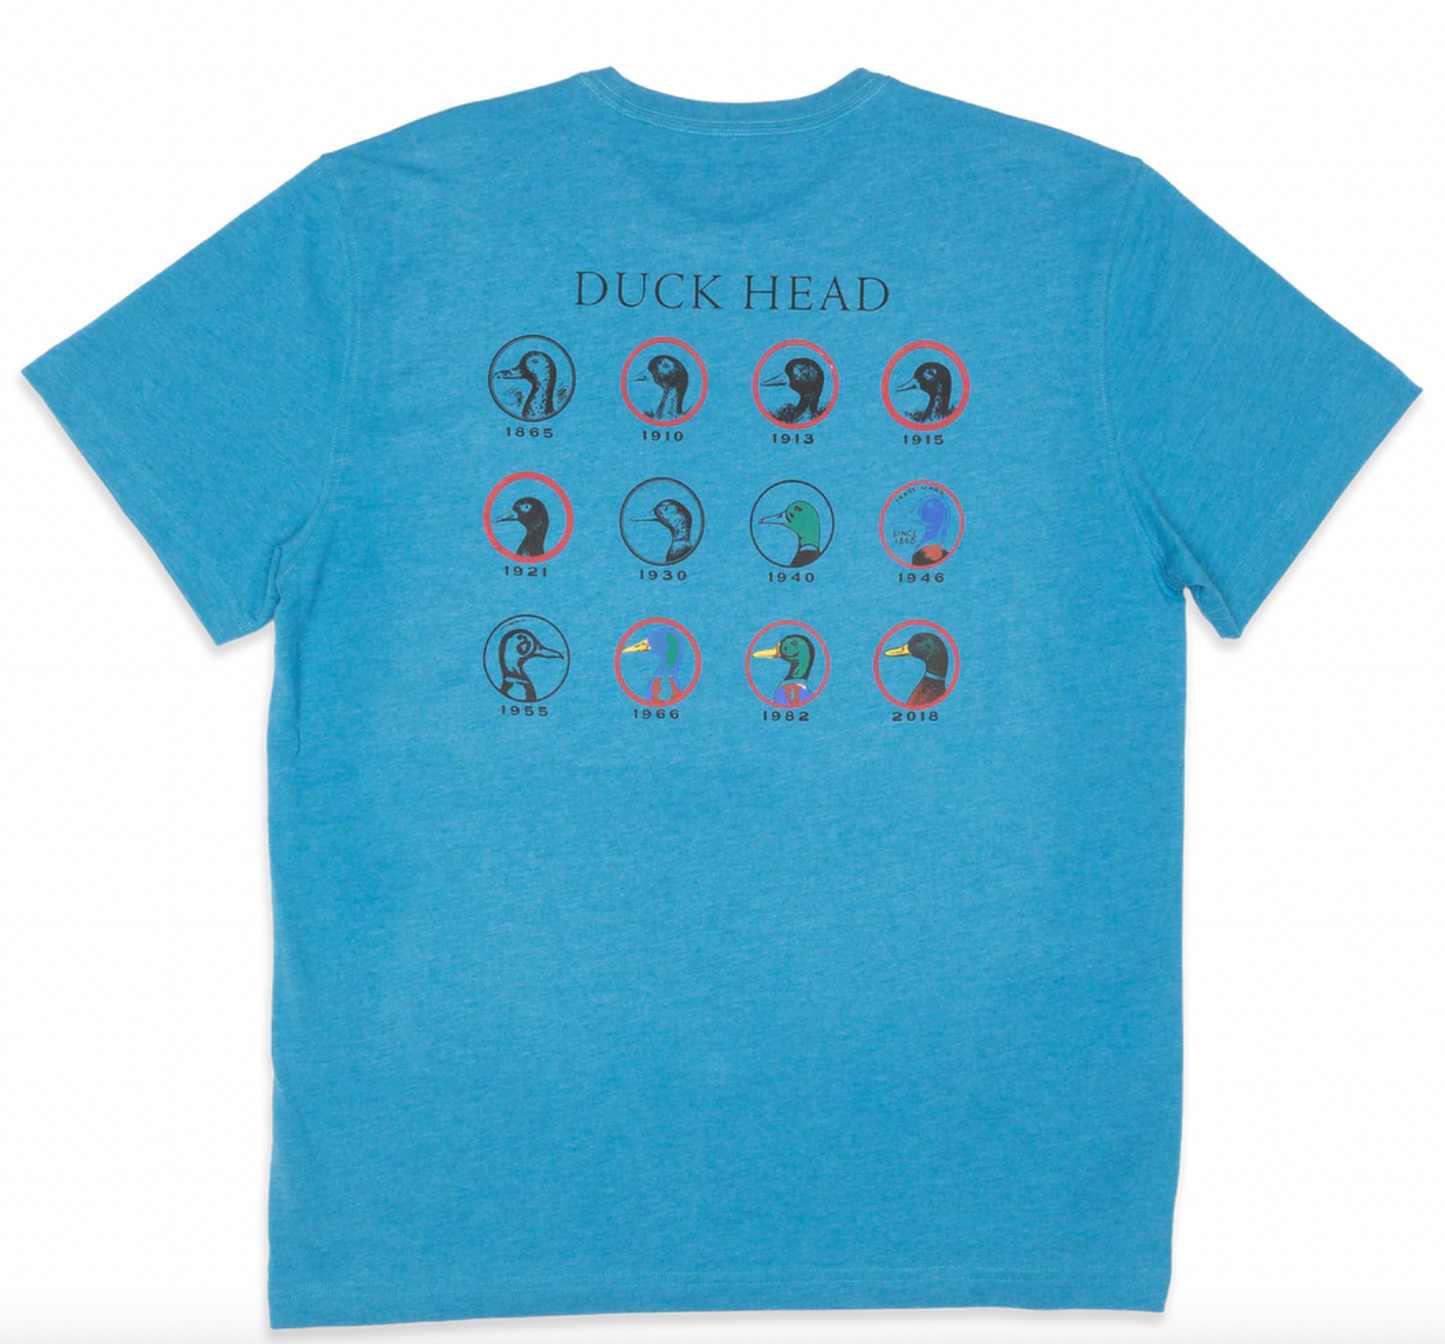 Duck Head Timeline T-Shirt